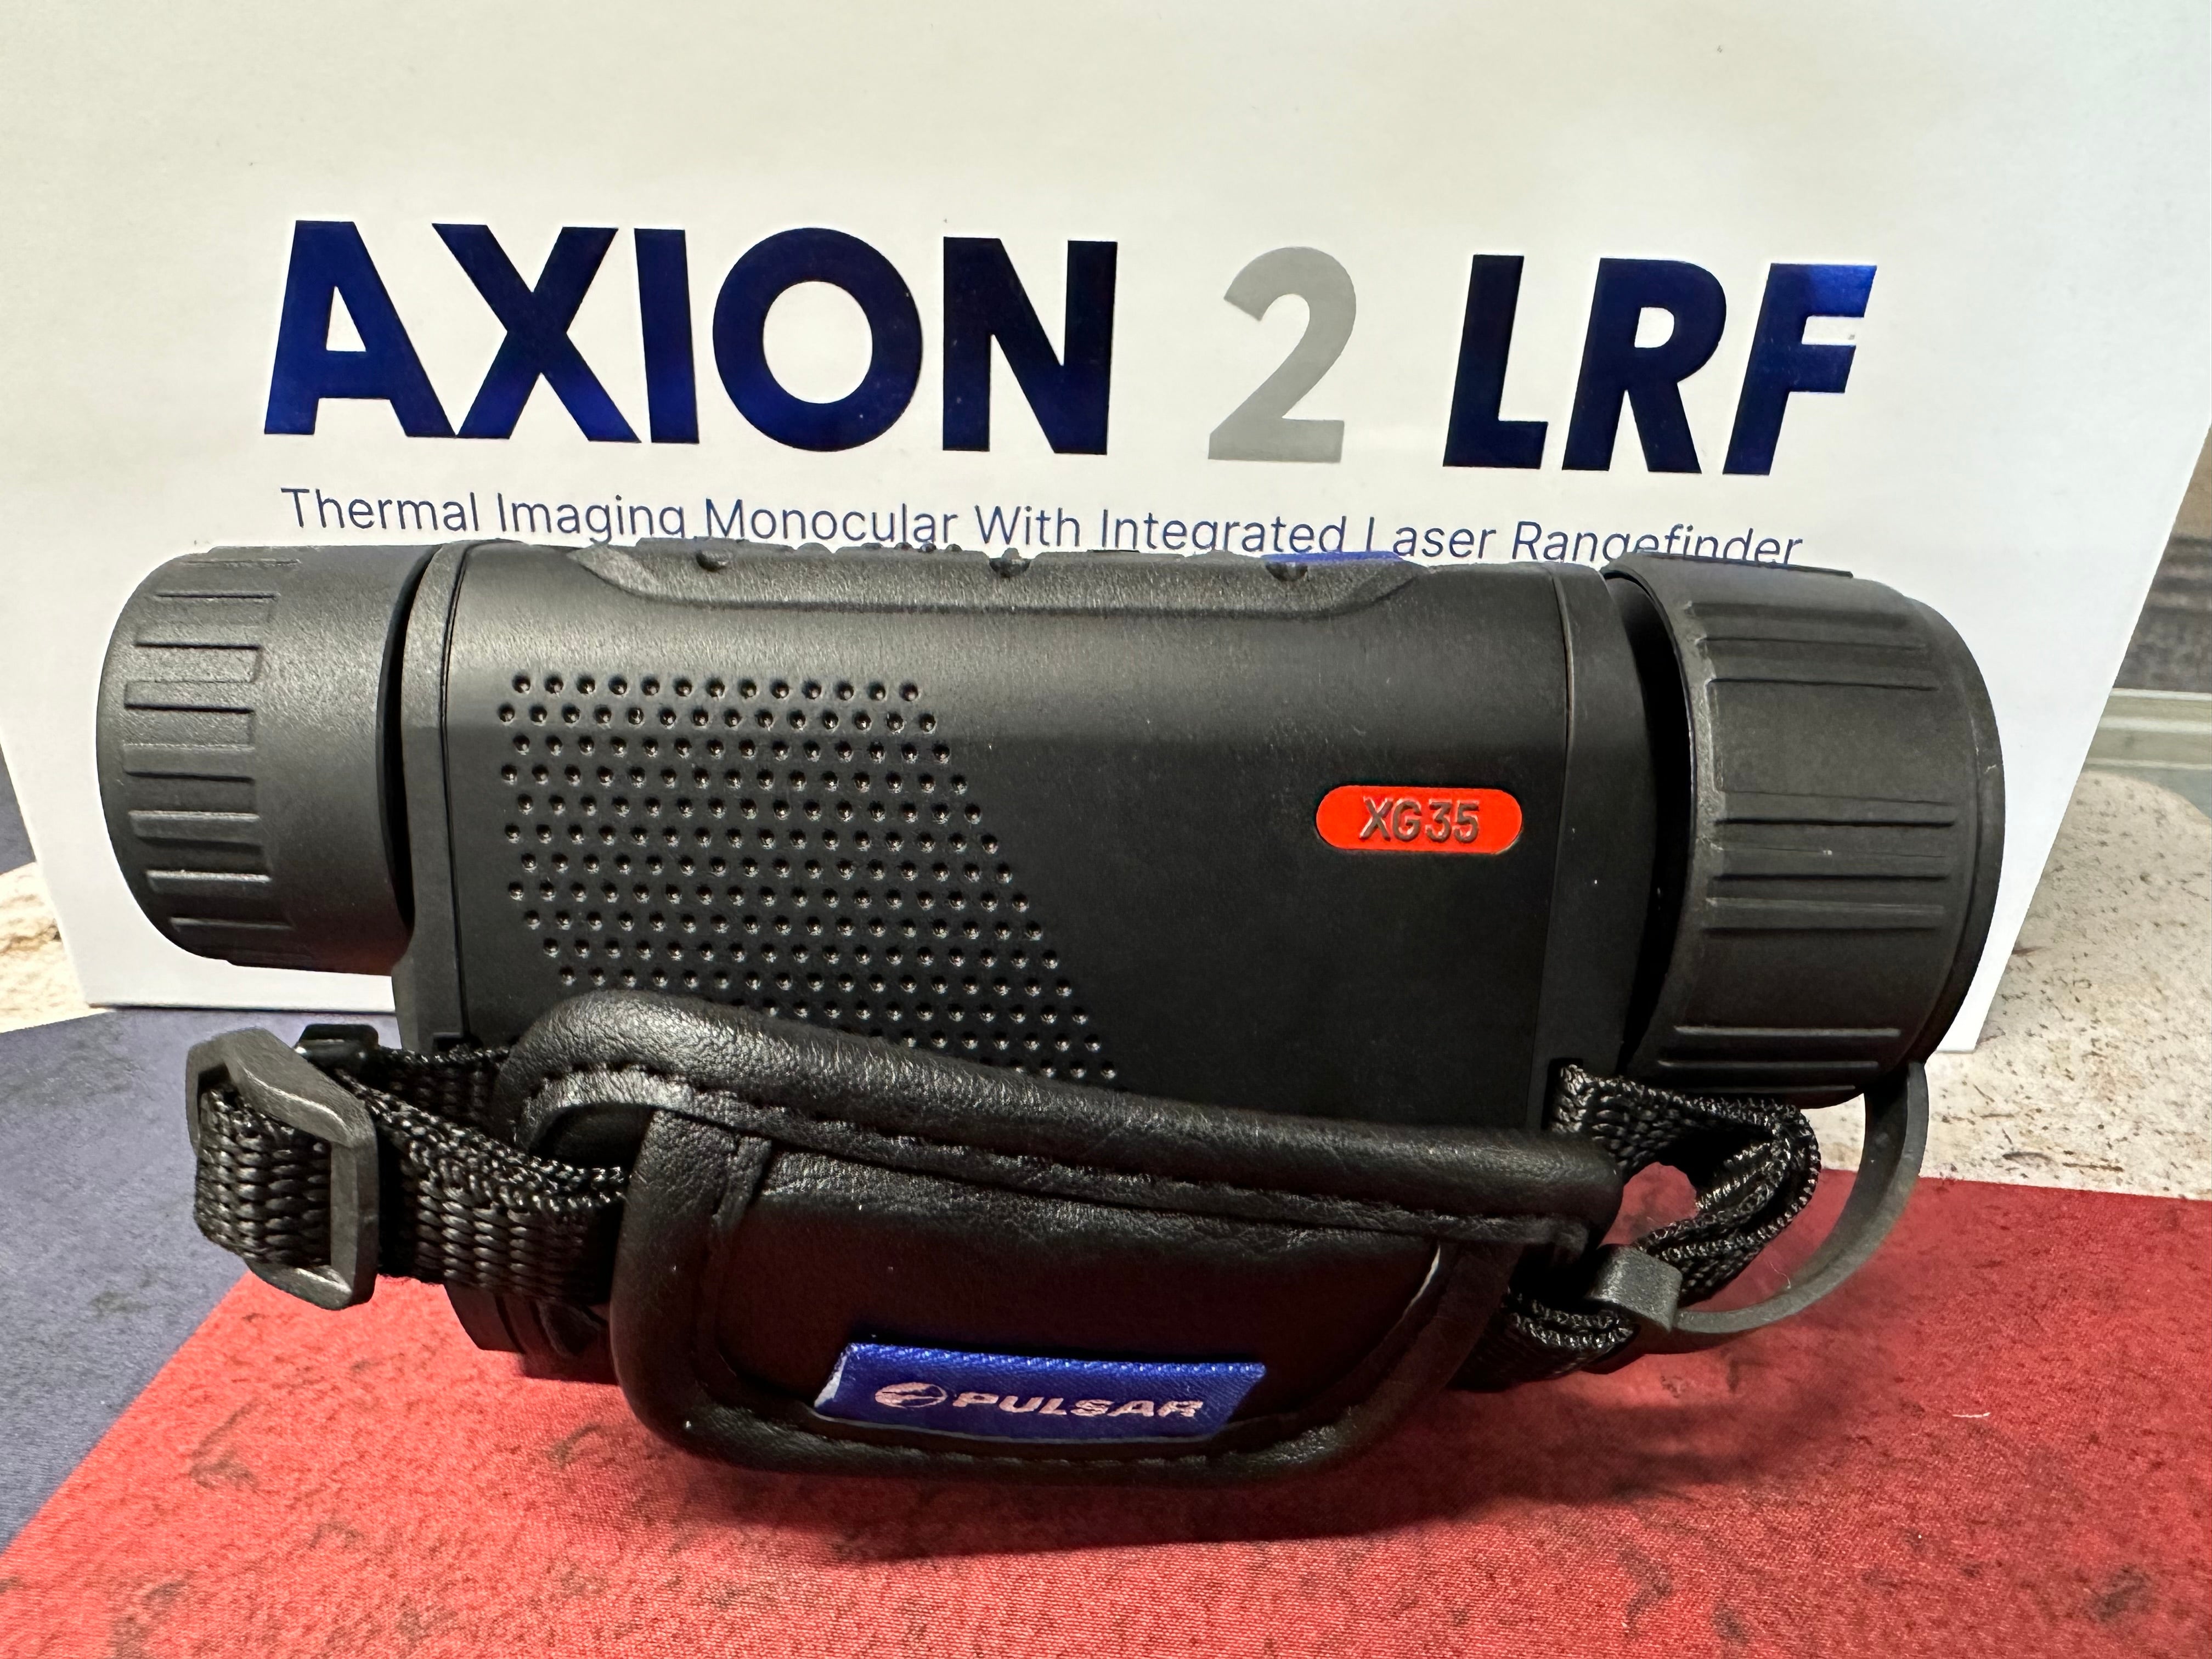 Pulsar Axion 2 LRF XG35 640 Thermal Monocular - Store Demo